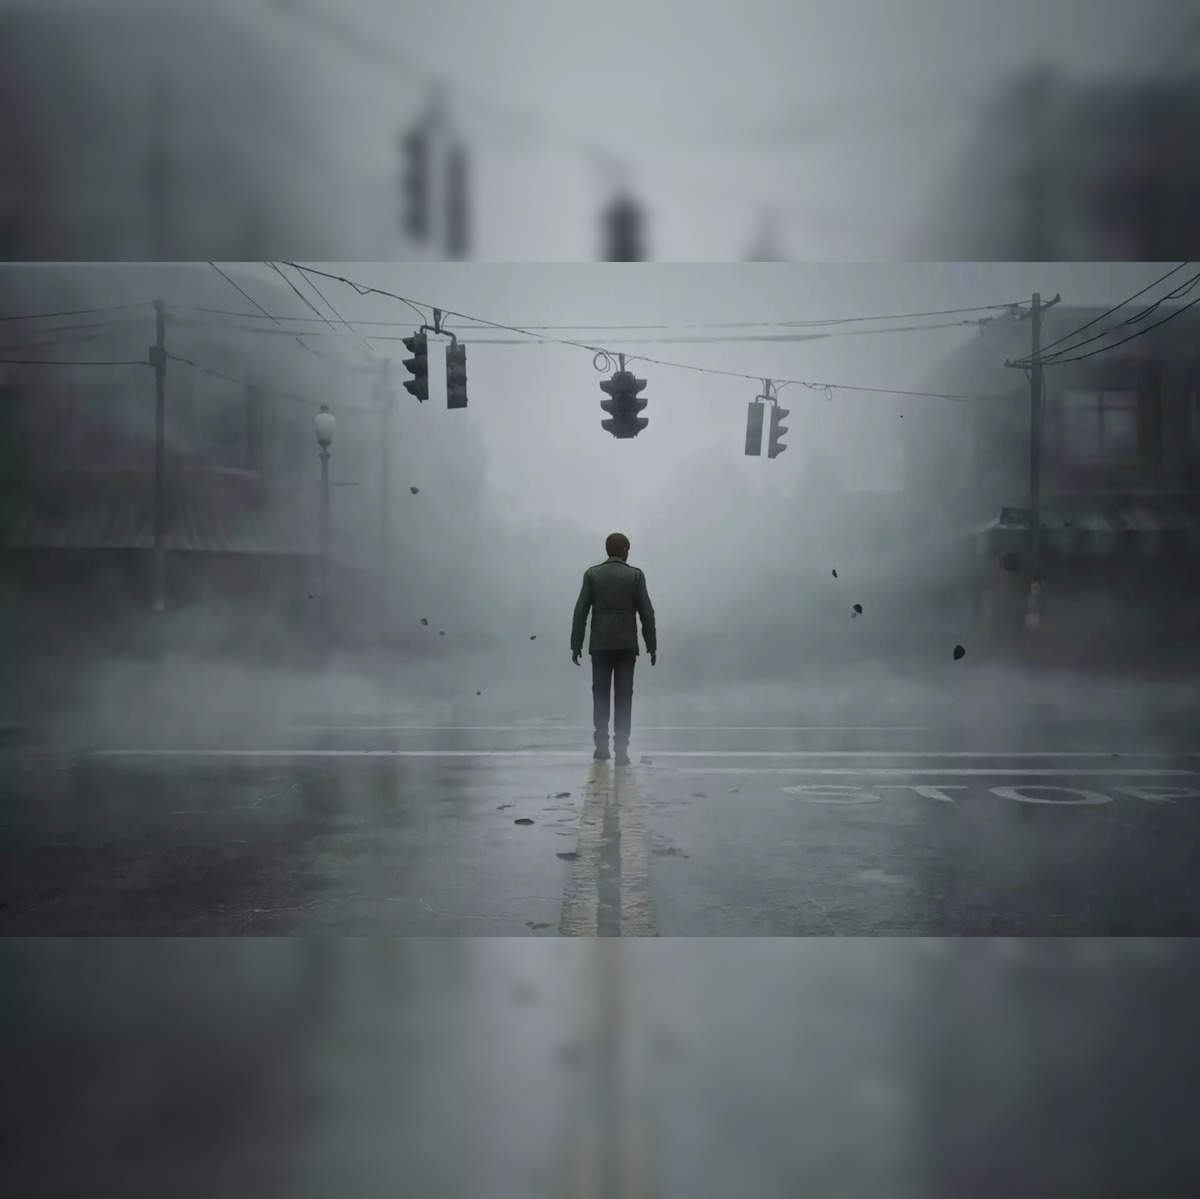 Silent Hill 2: Enhanced Edition Part 4 Gameplay